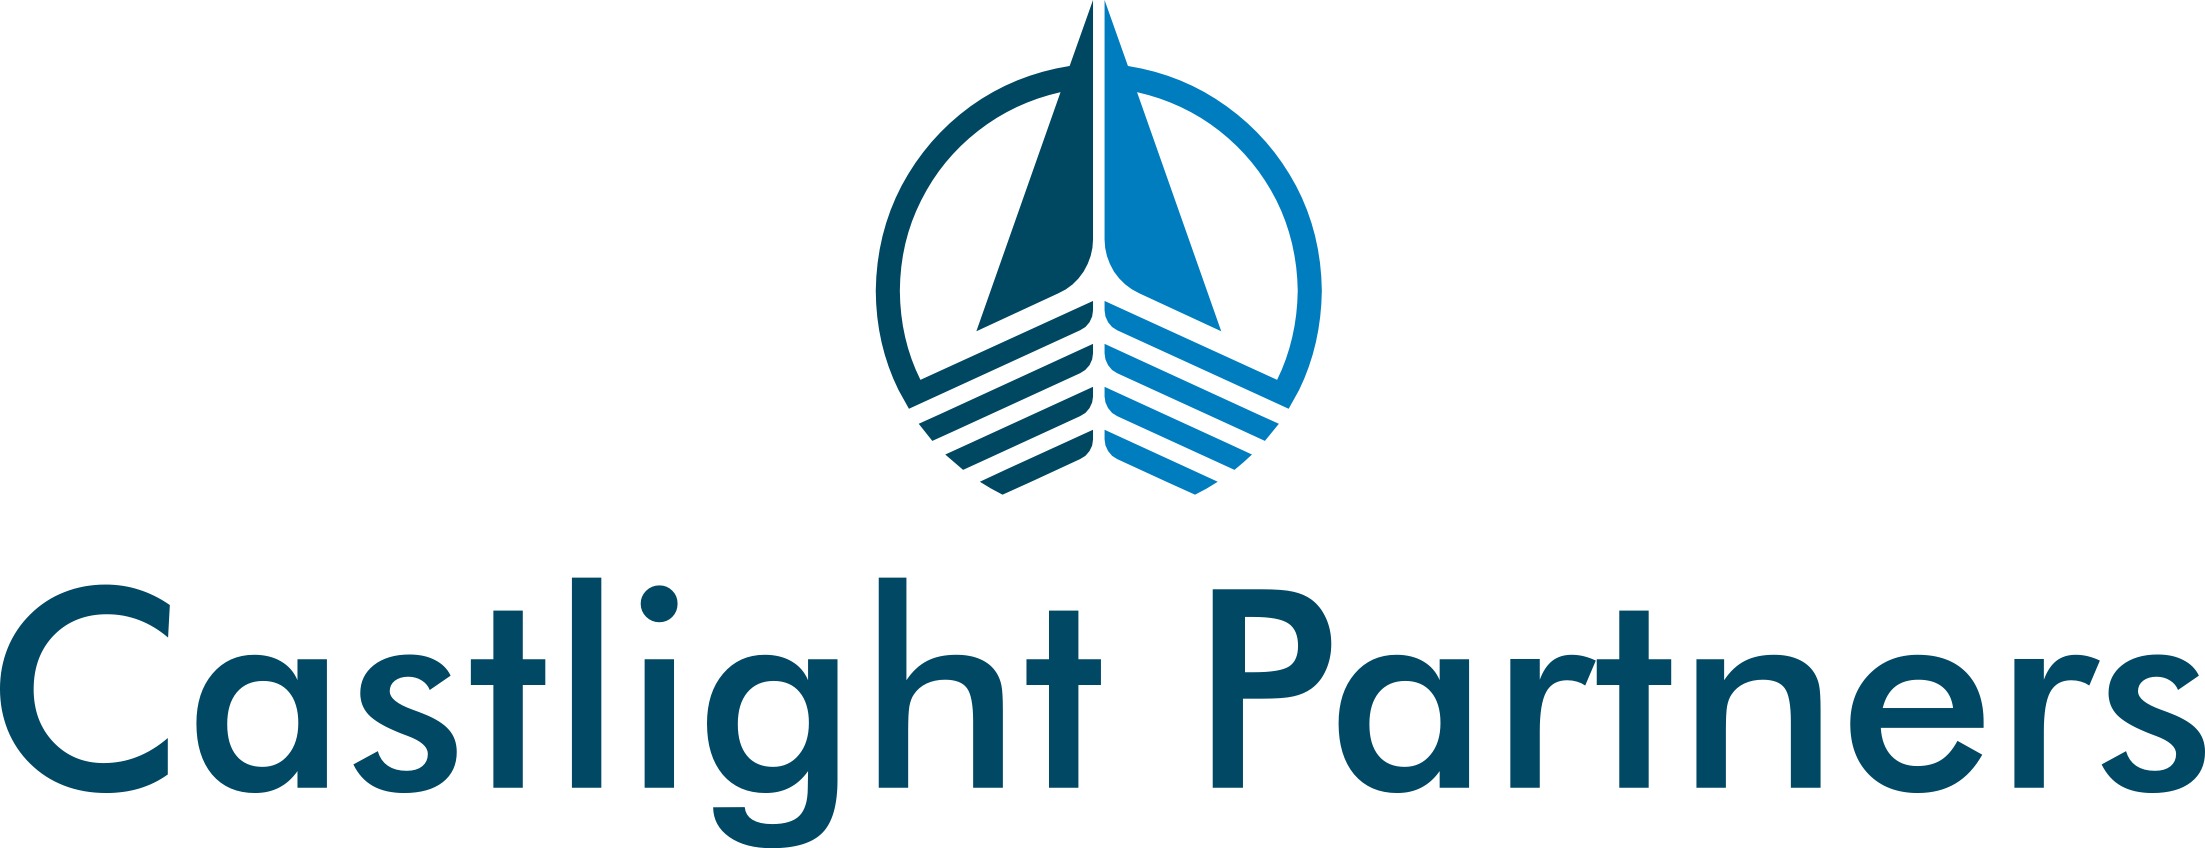 CastLight Partners